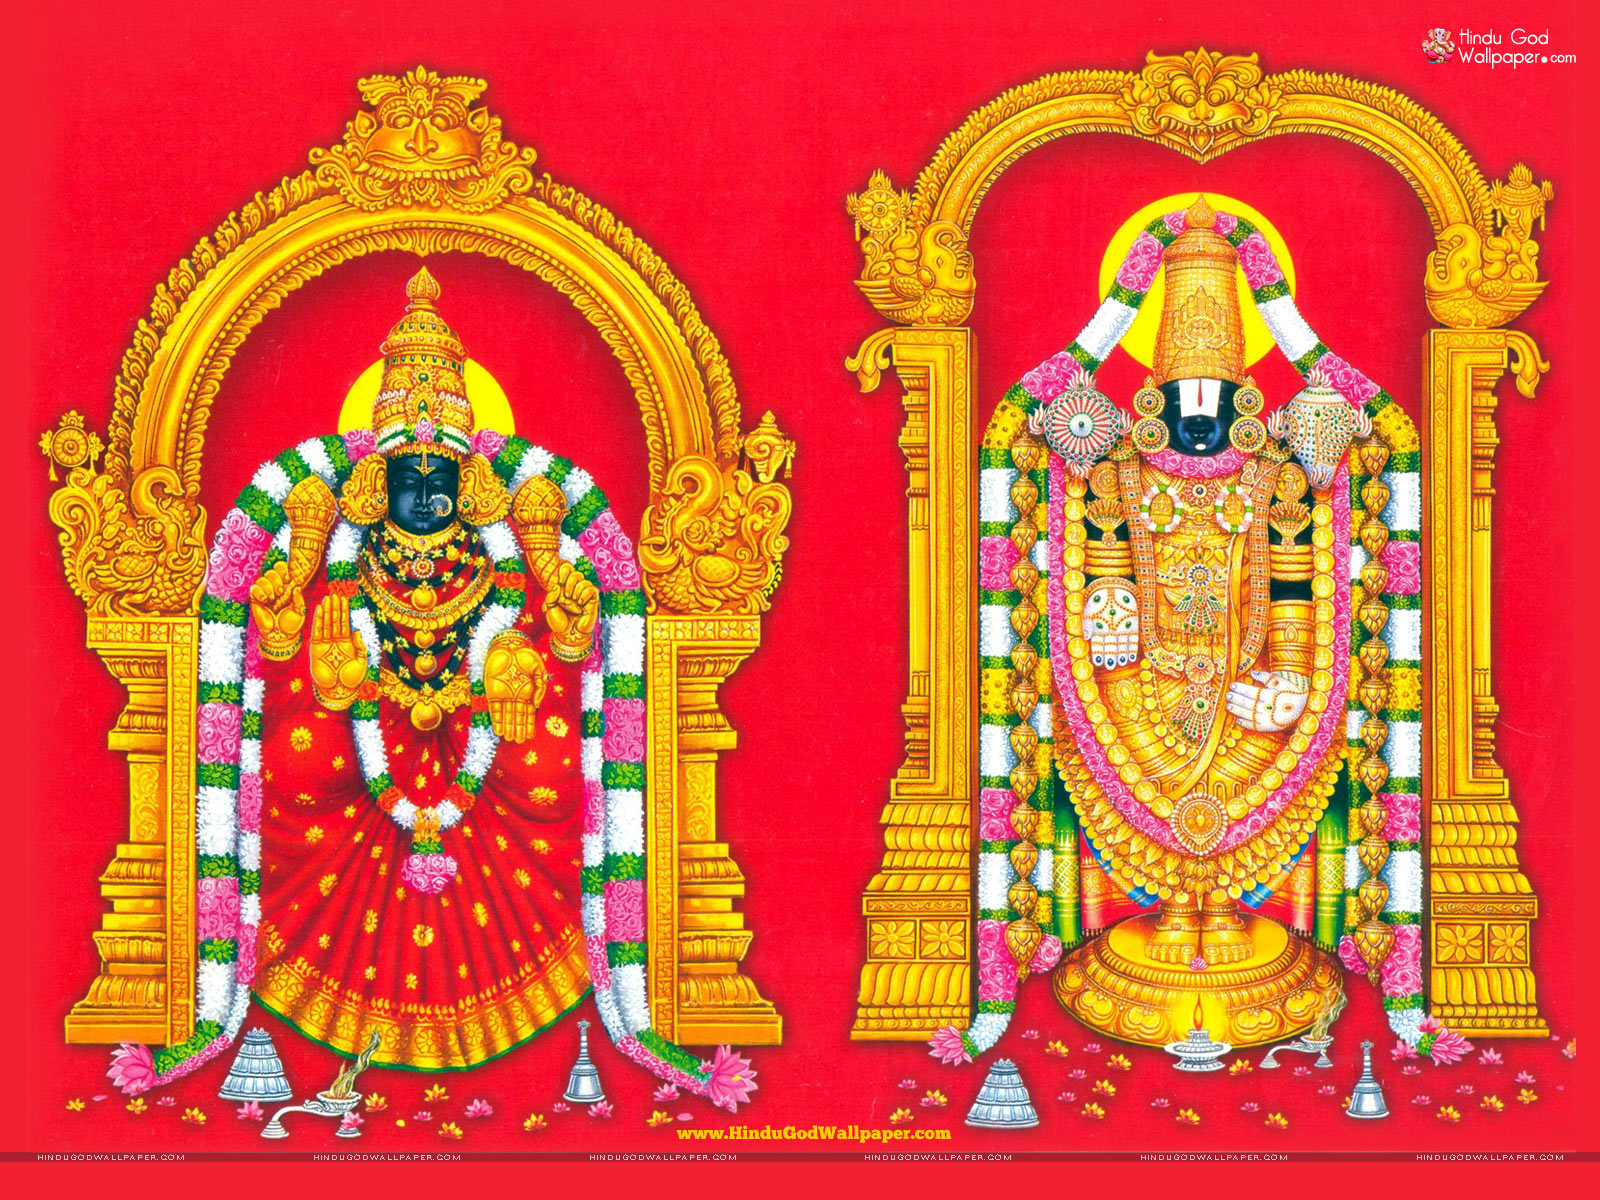 More Lord Venkateswara Beautiful Wallpapers, Images & Photos.